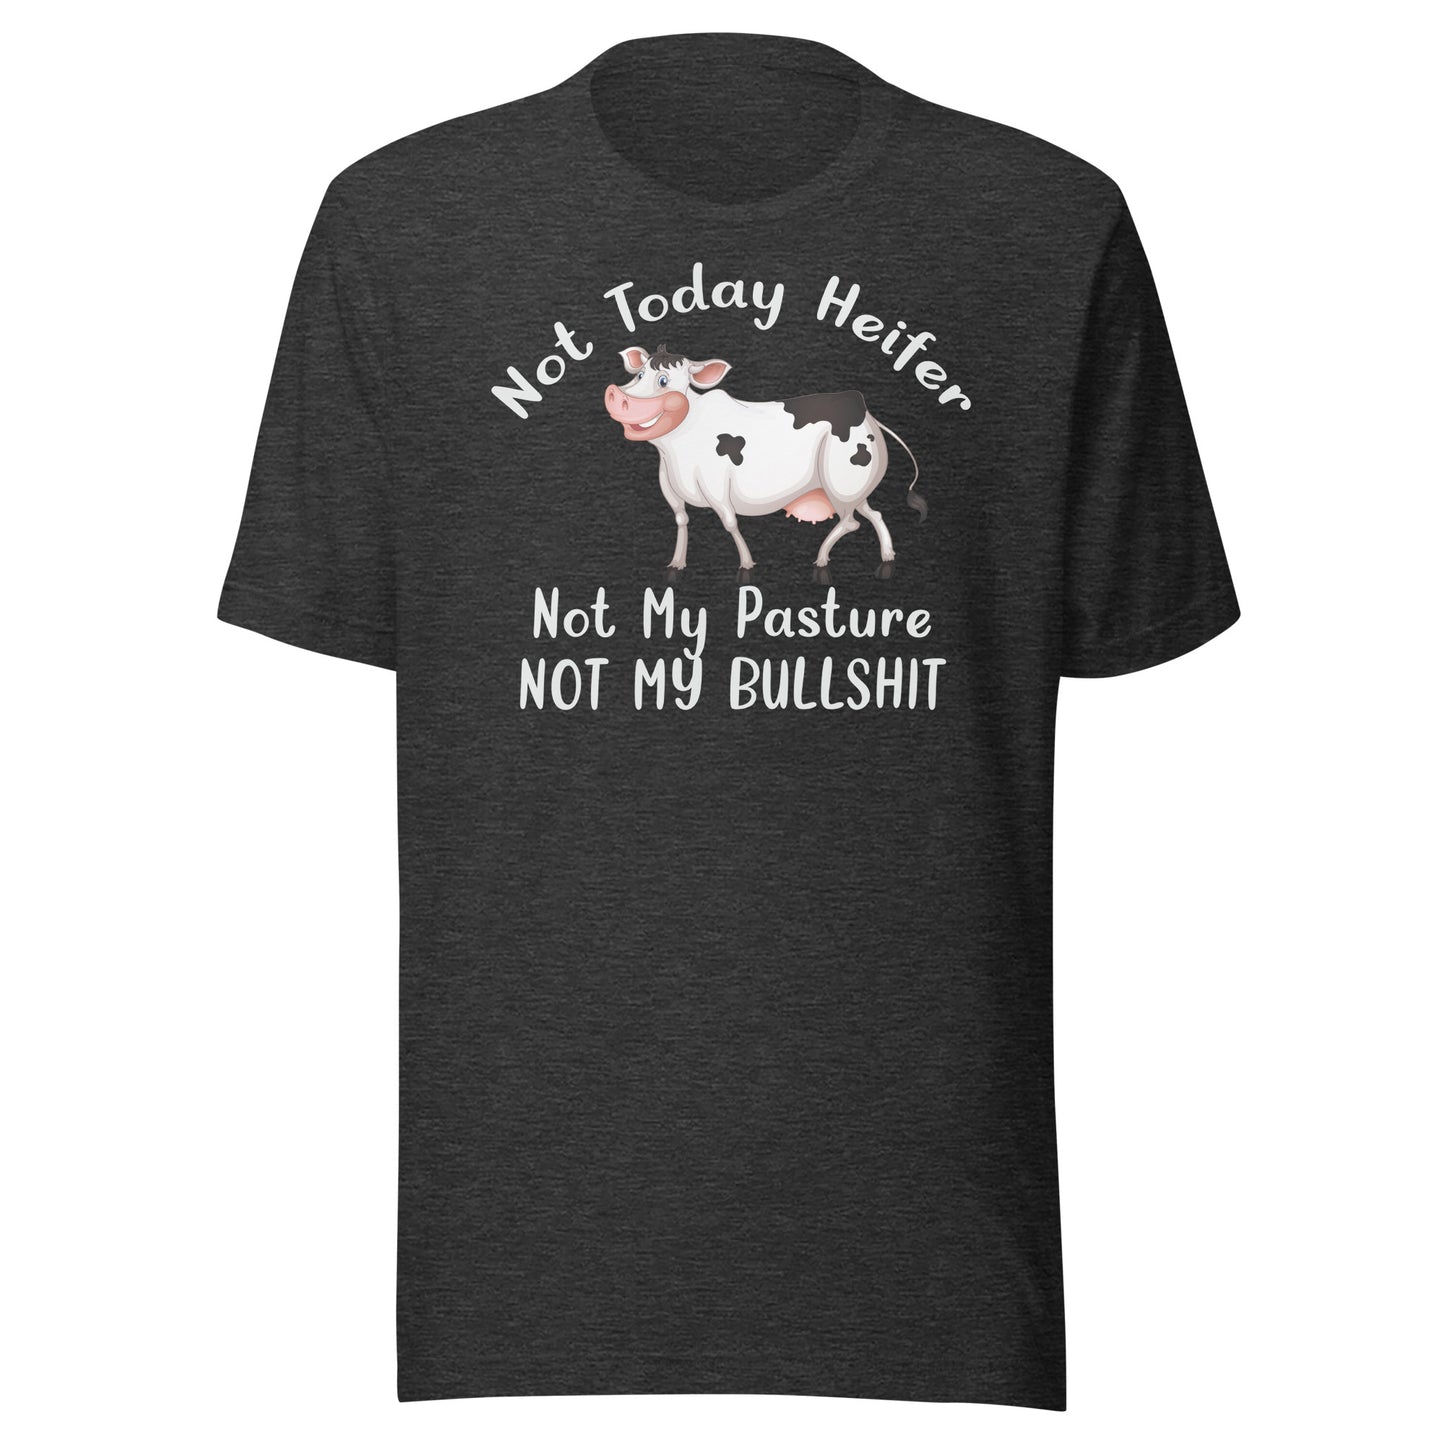 Not today Heifer. Not my pasture. Not my bullshit T-shirt